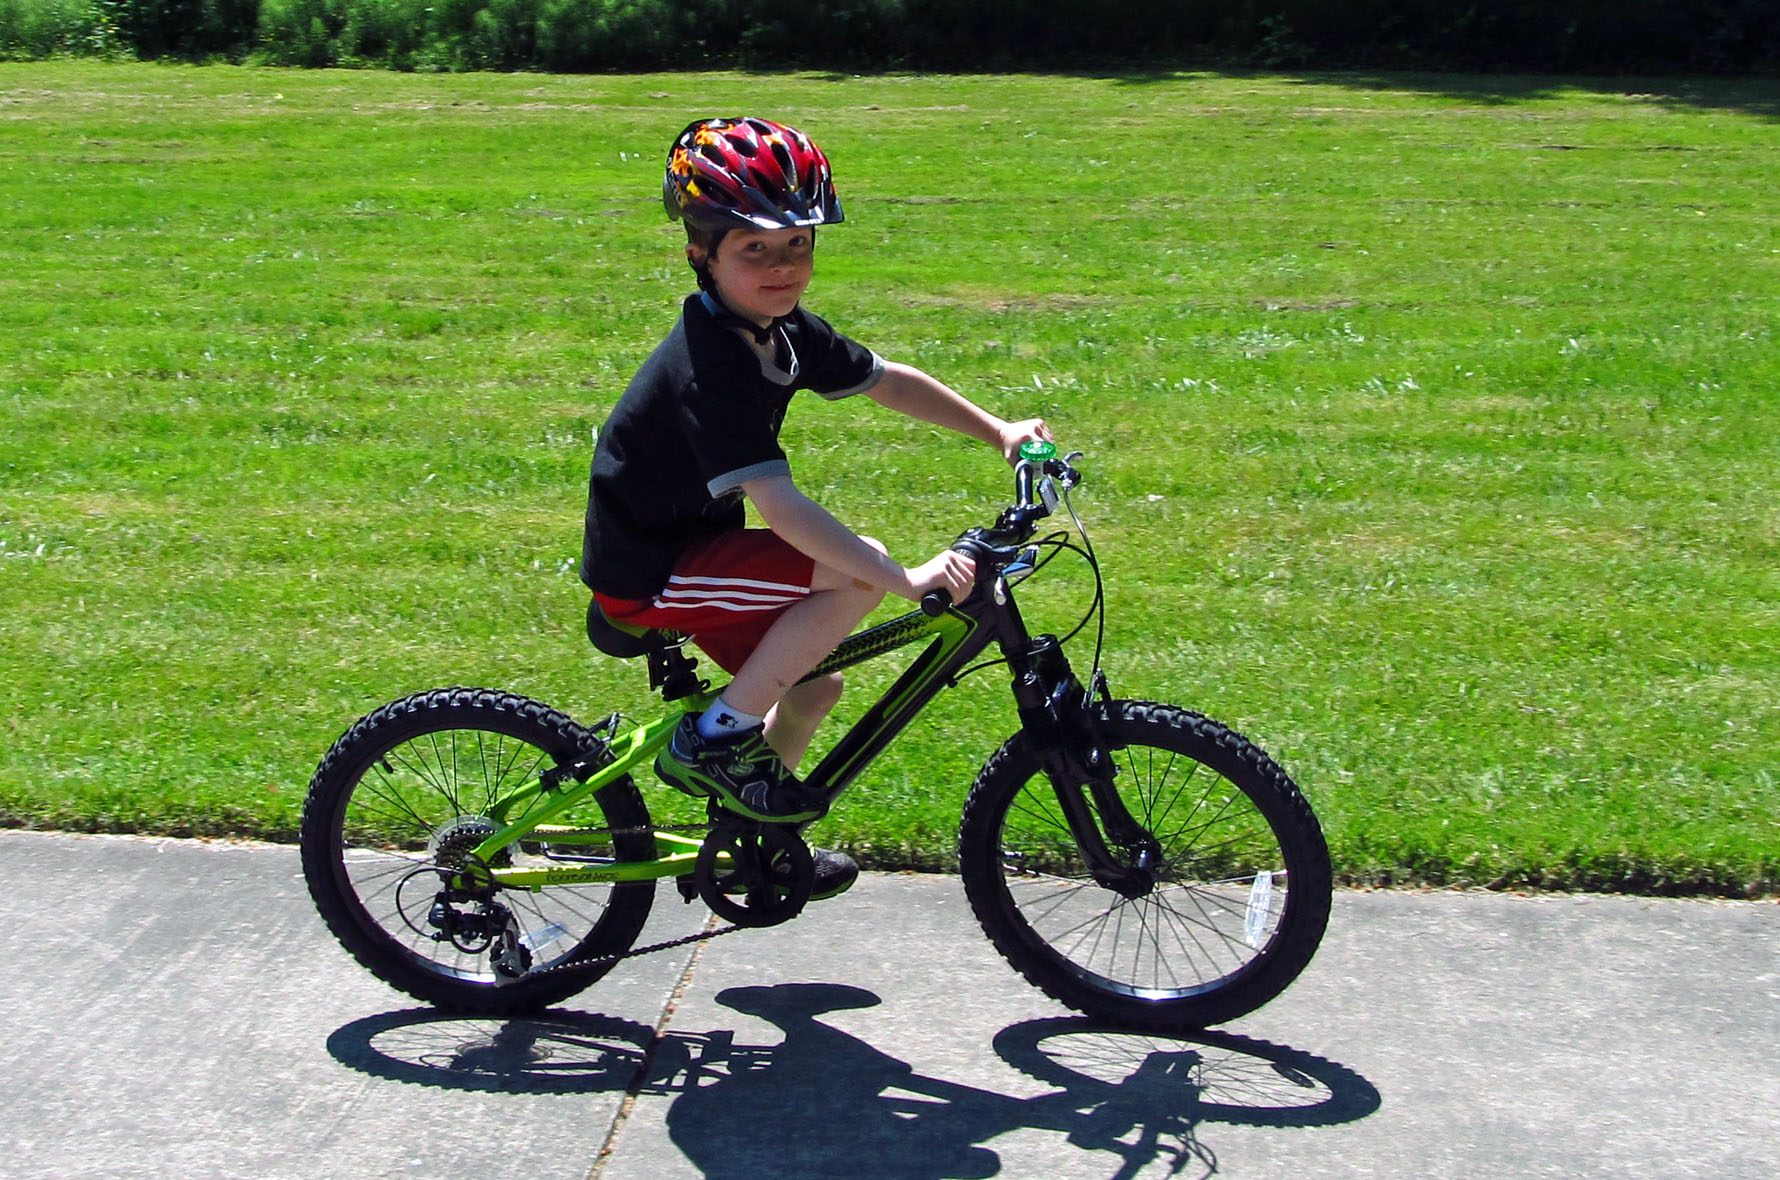 He rode a bike yesterday. Велосипед Bike. Мальчик на велосипеде. Велосипедист ребенок. Ride a Bike.